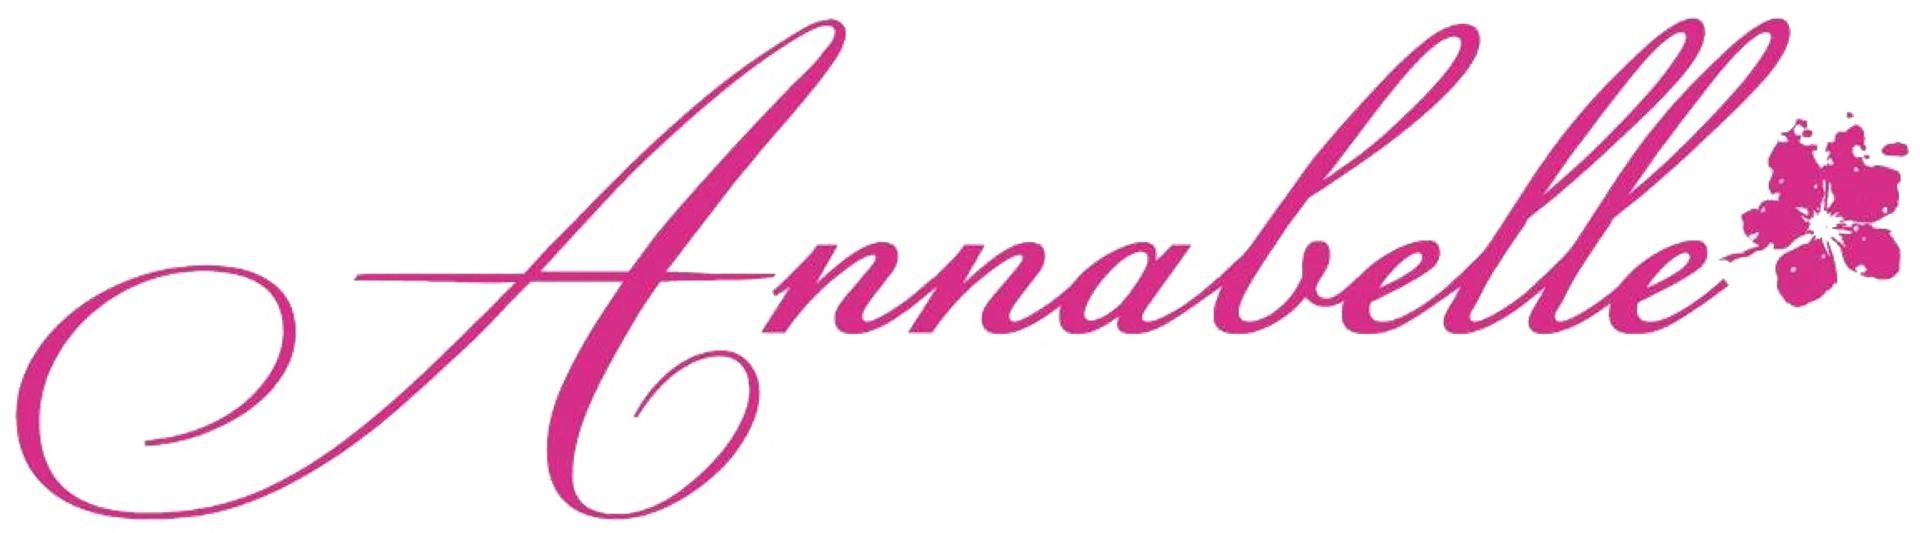 ANNABELLE logo. Current catalogue